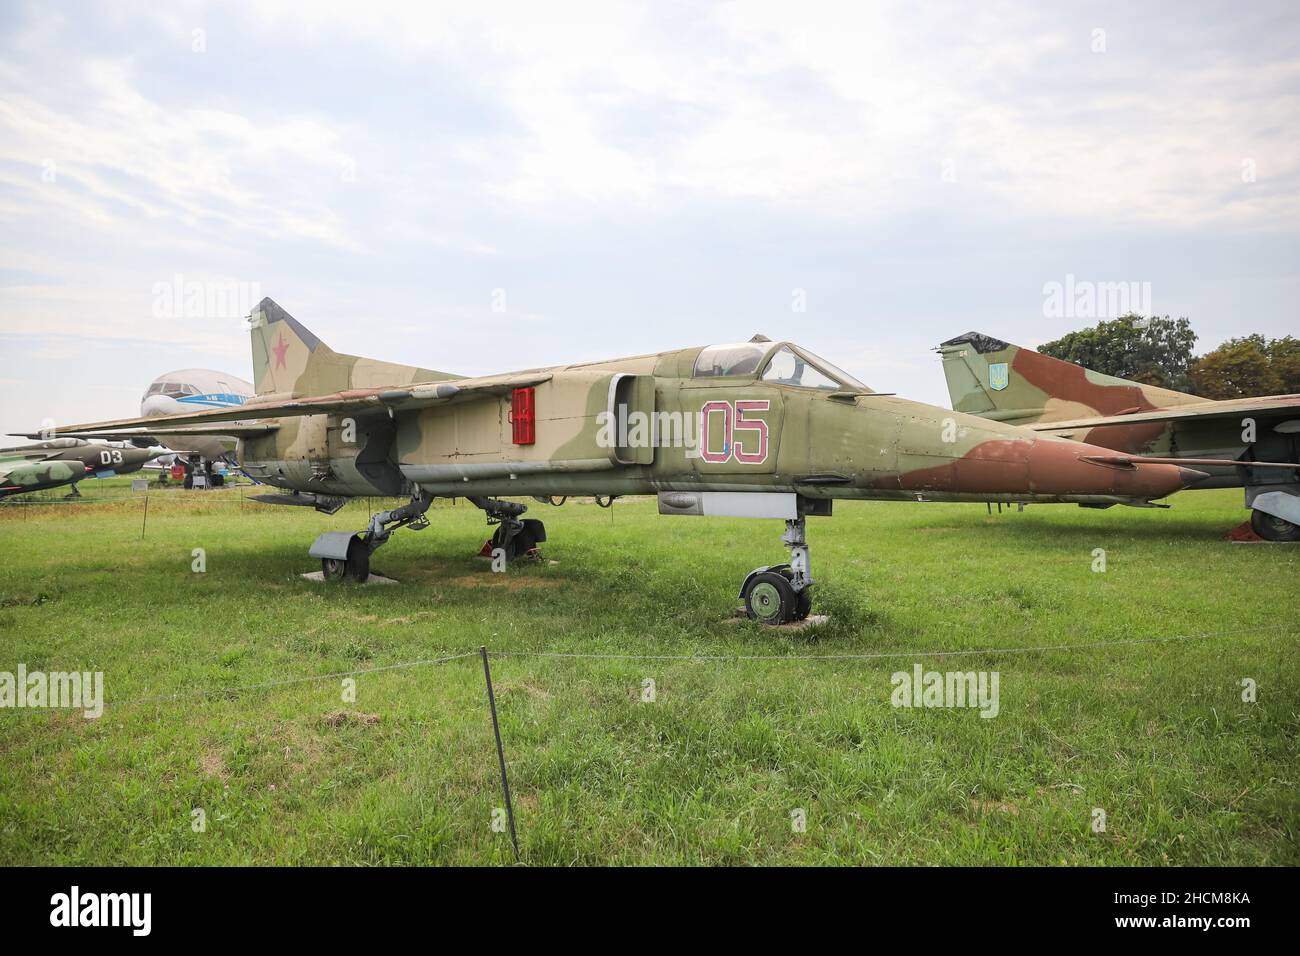 KIEV, UKRAINE - AUGUST 01, 2021: Ukrainian Air Force Mikoyan-Gurevich MiG-23 Flogger displayed at Oleg Antonov State Aviation Museum Stock Photo